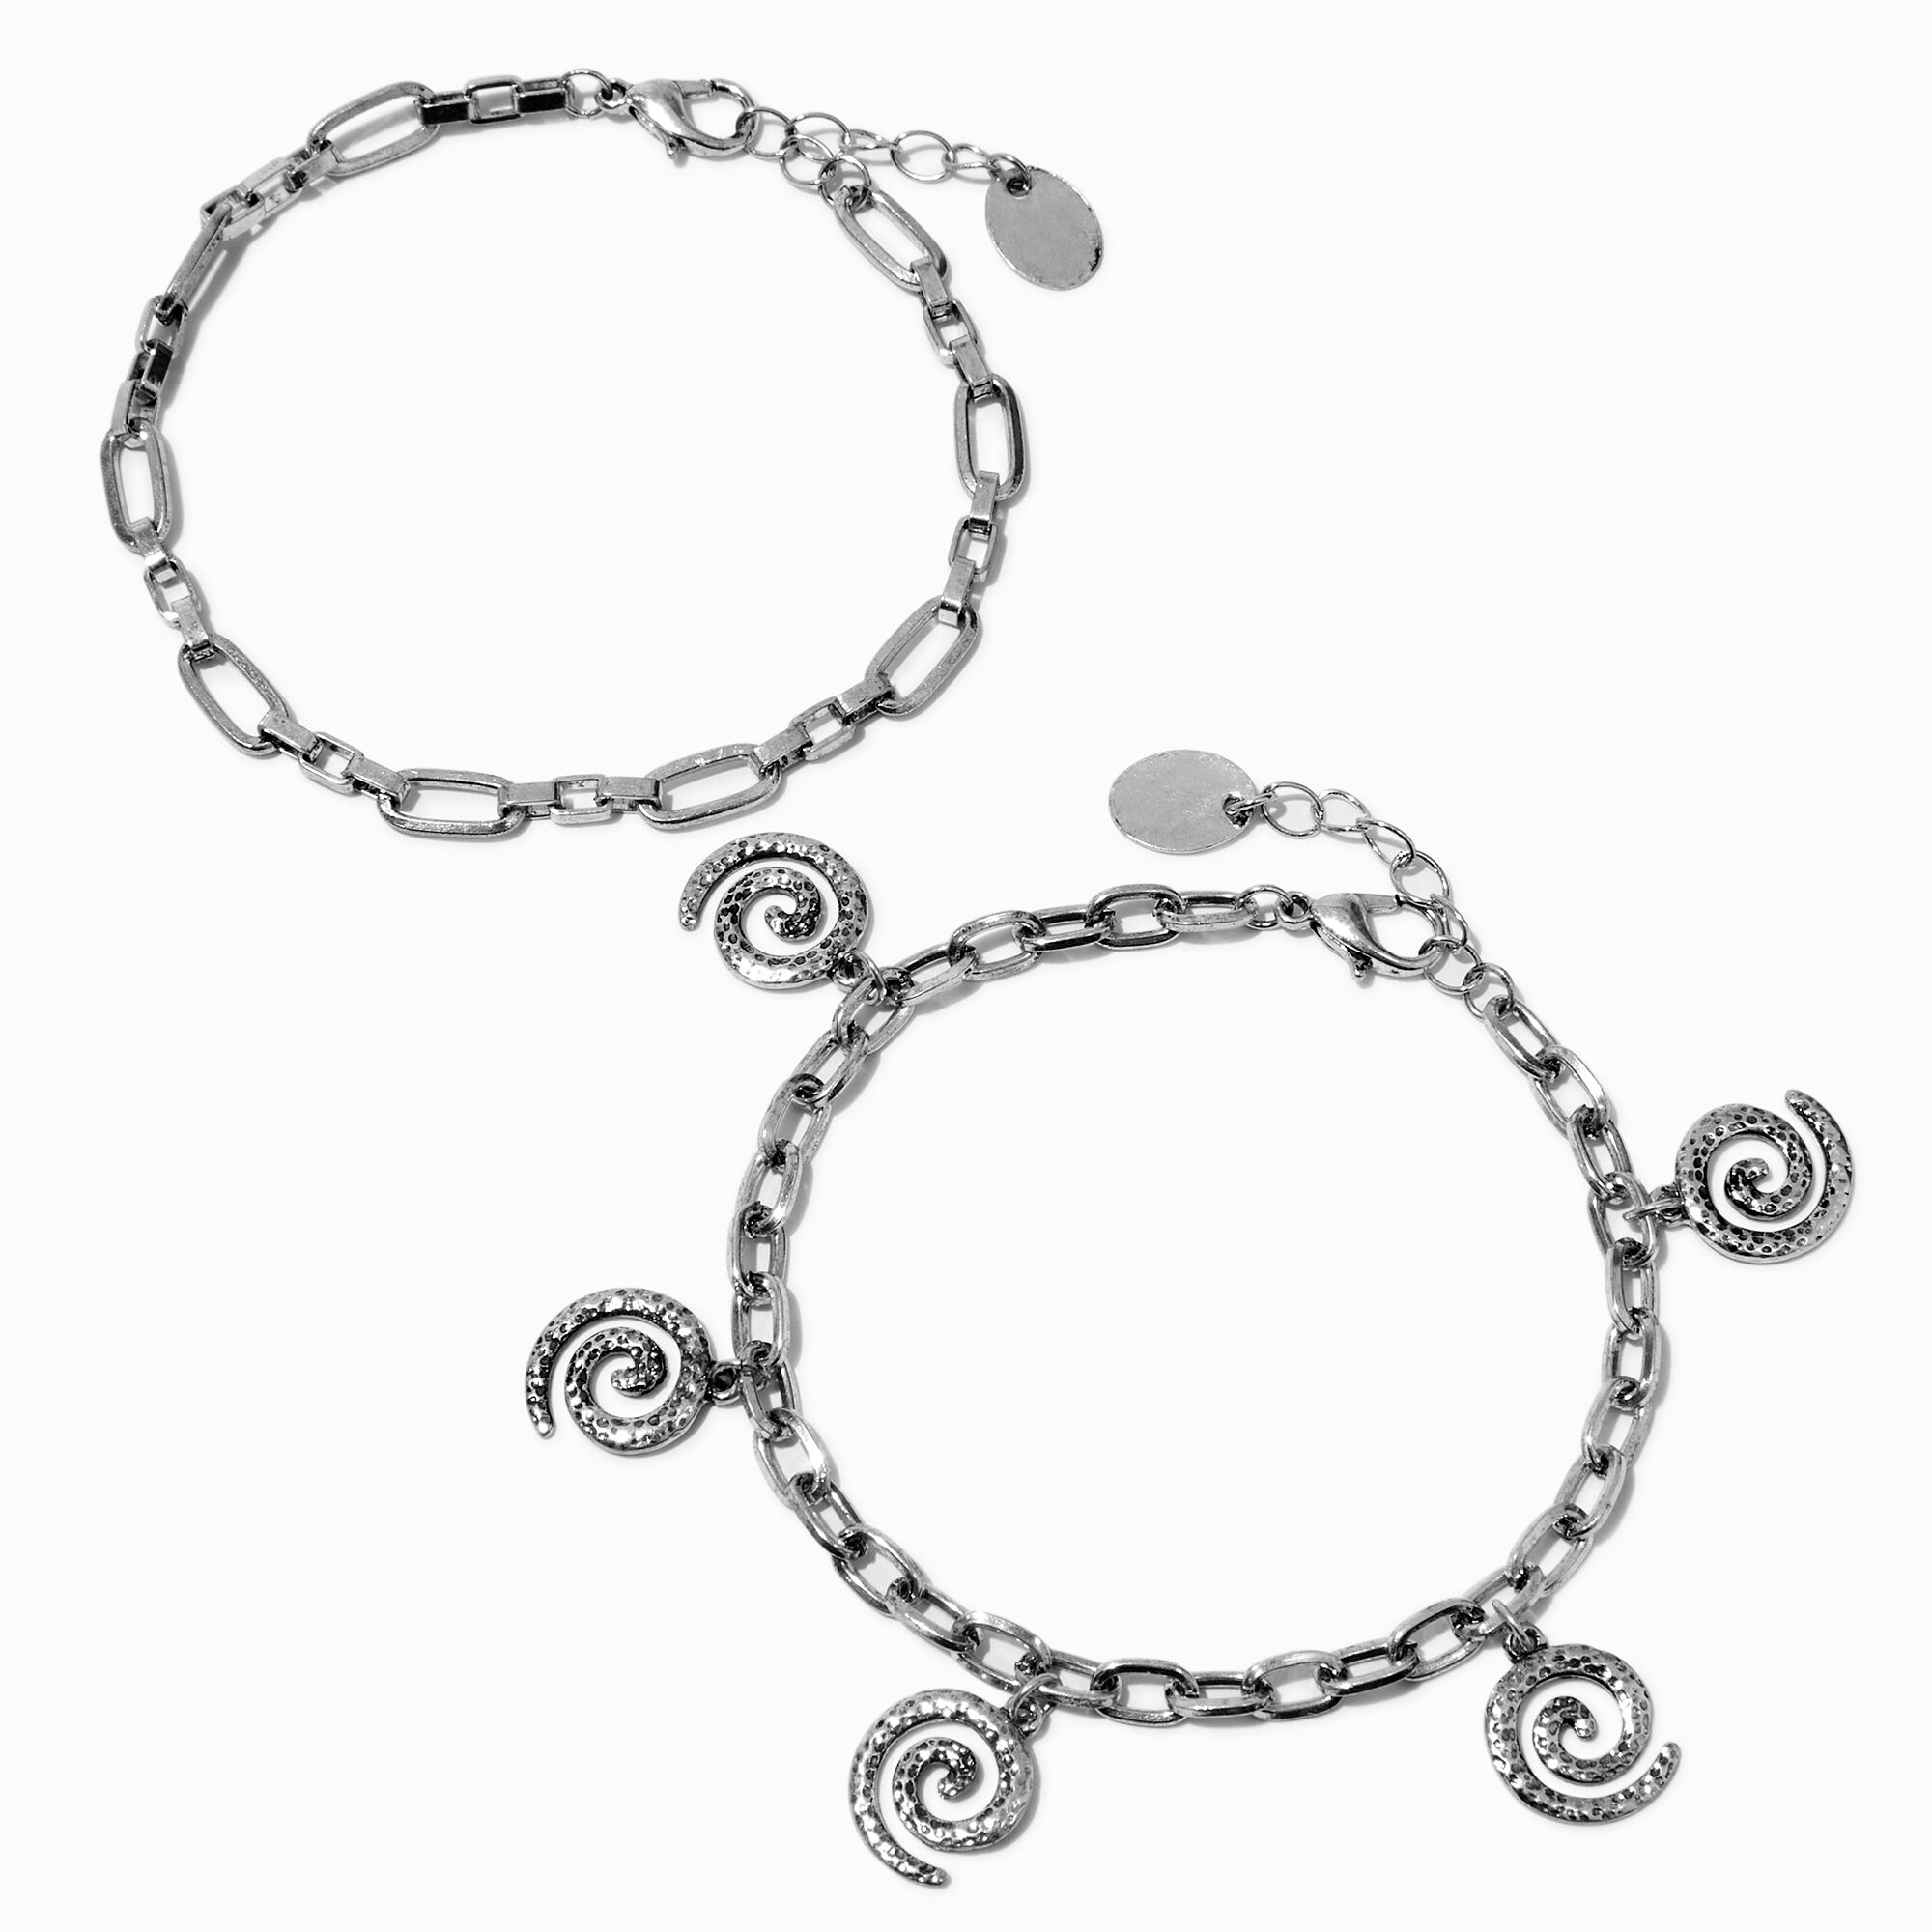 View Claires Tone Spiral Bracelet Set 2 Pack Silver information